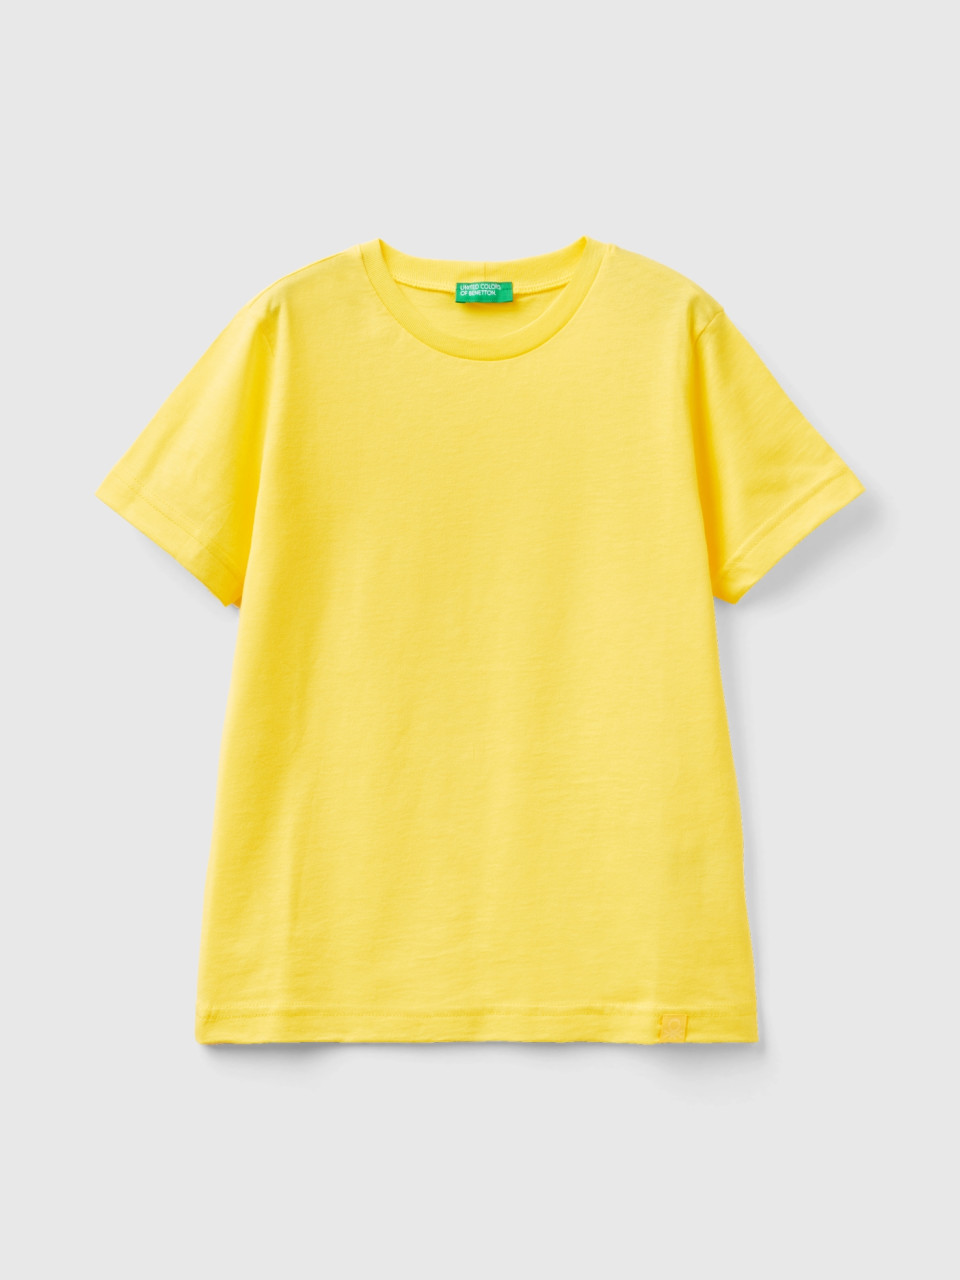 Benetton, Organic Cotton T-shirt, Yellow, Kids